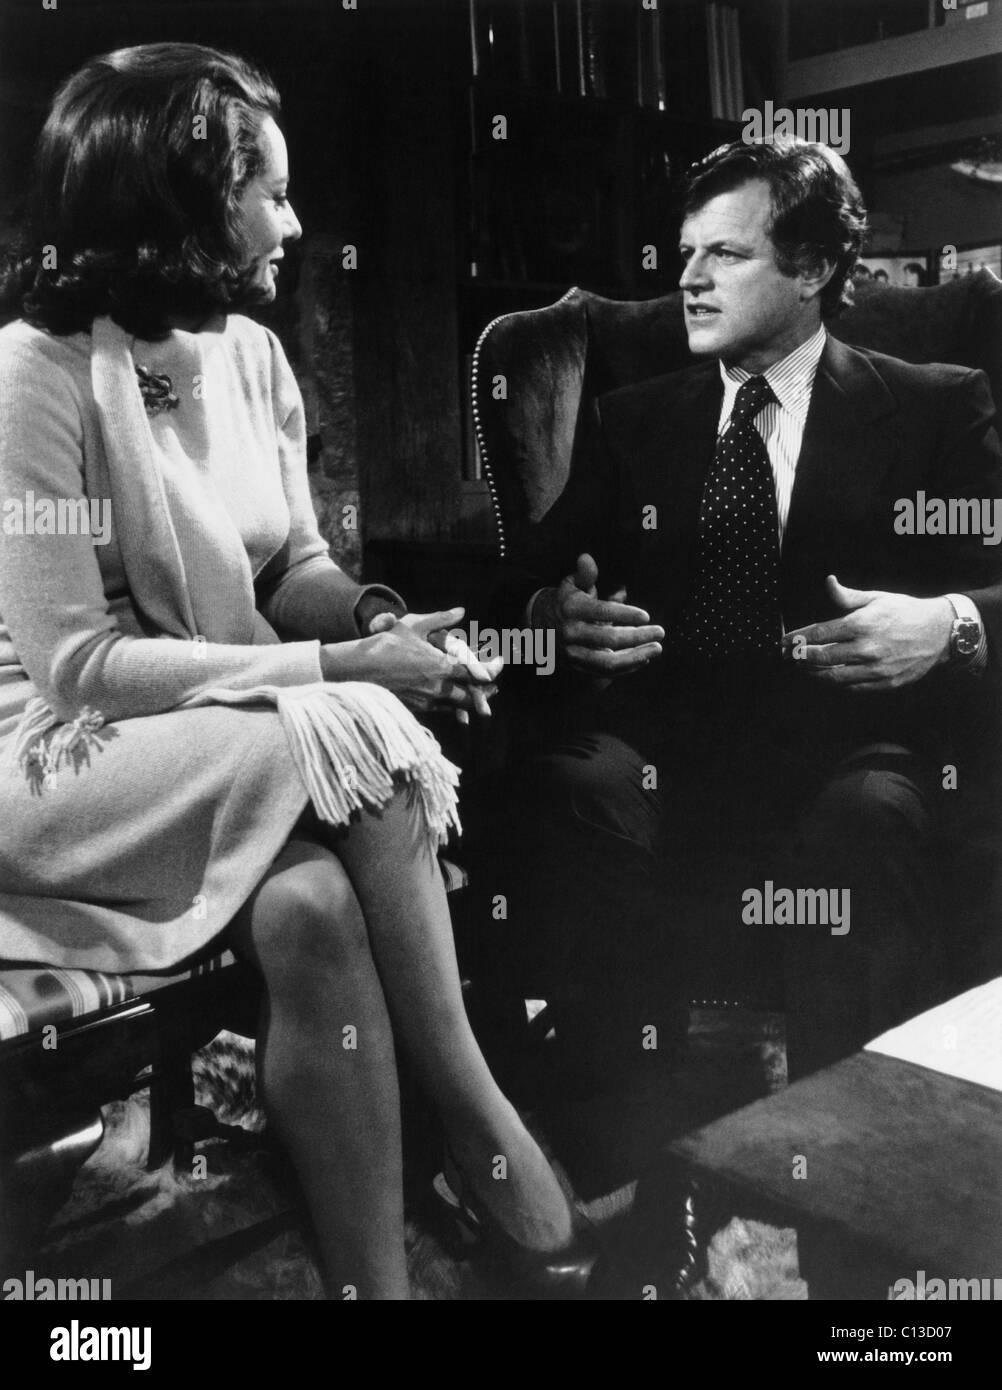 Barbara Walters, left, interviewing Senator Edward Kennedy, ca. late 1960s Stock Photo